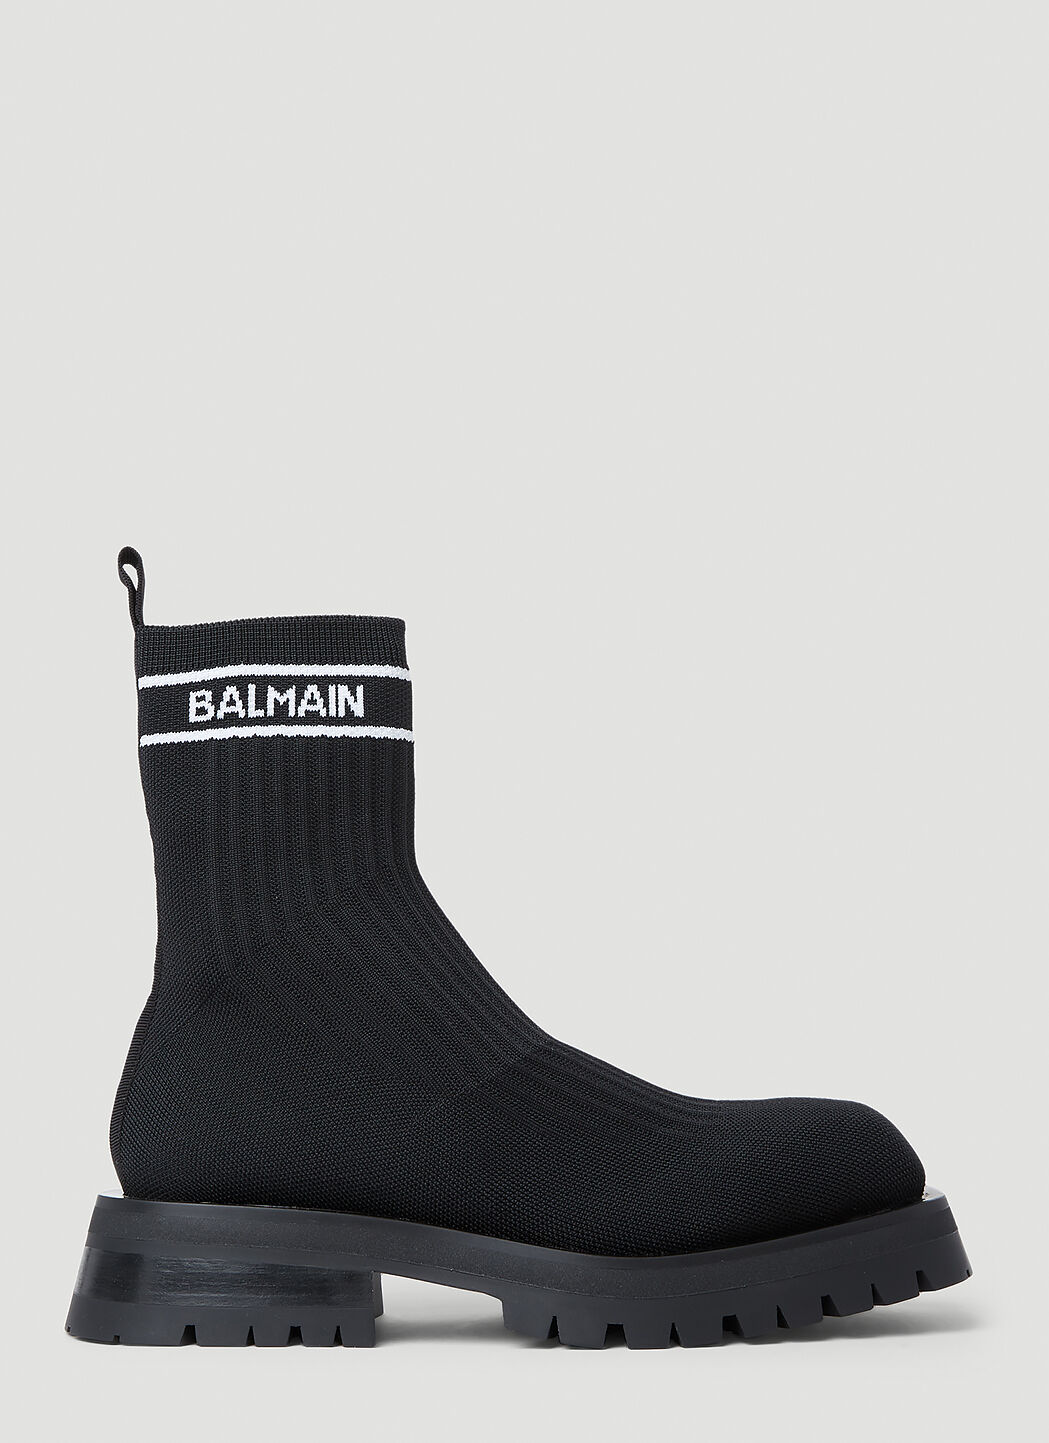 Balmain Knit Boots 그레이 bln0253009